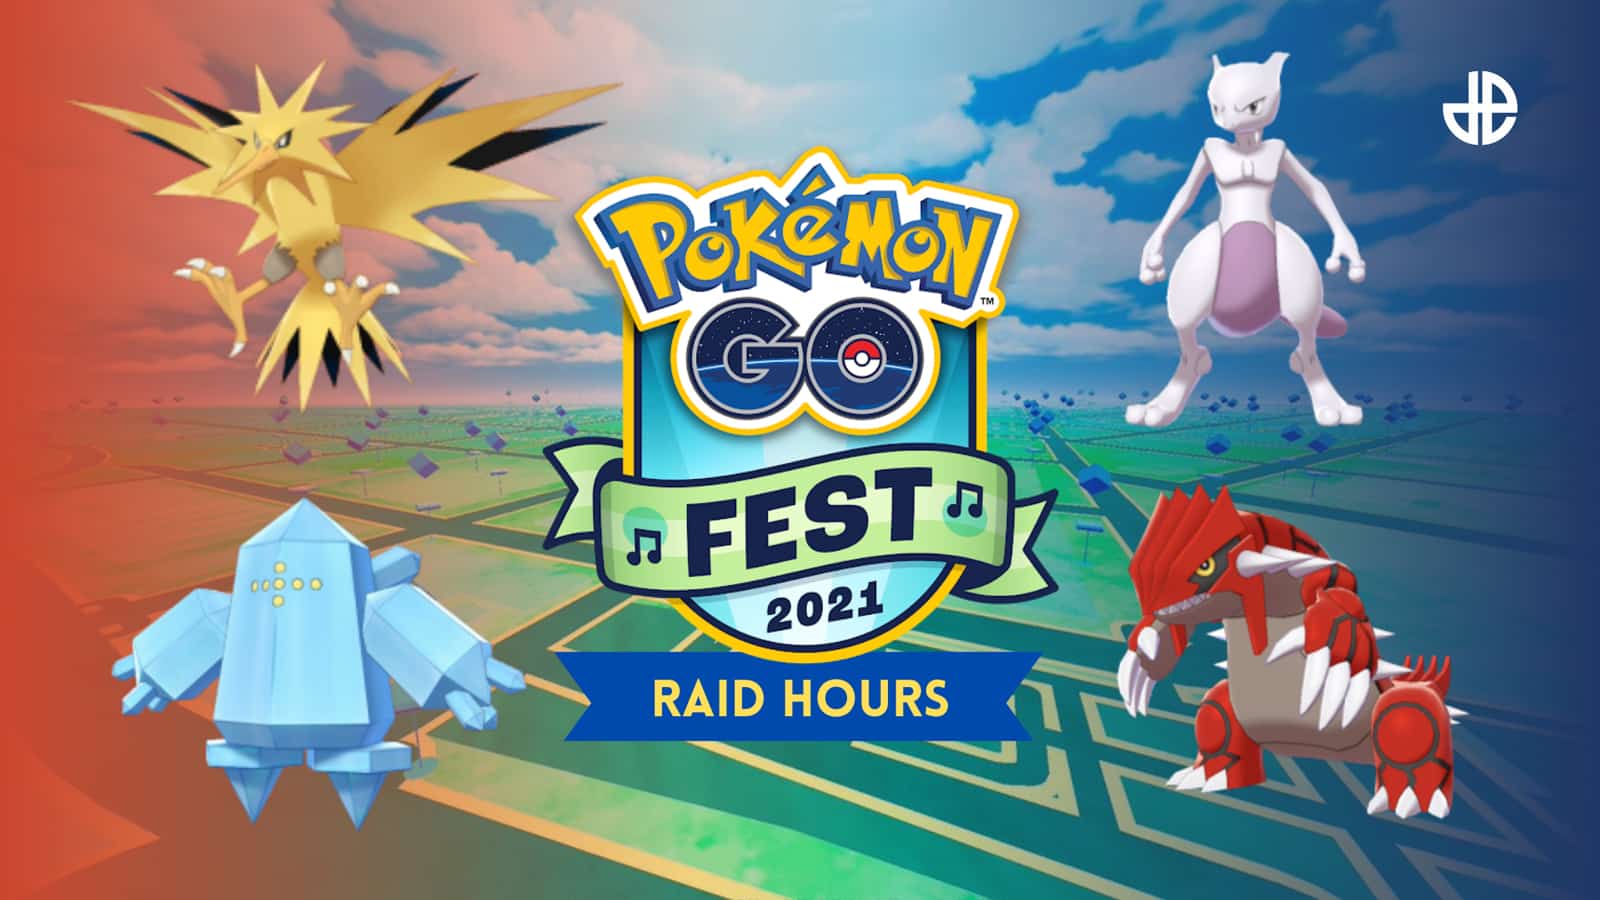 Pokemon Go Fest 2021 Raid Hour schedule